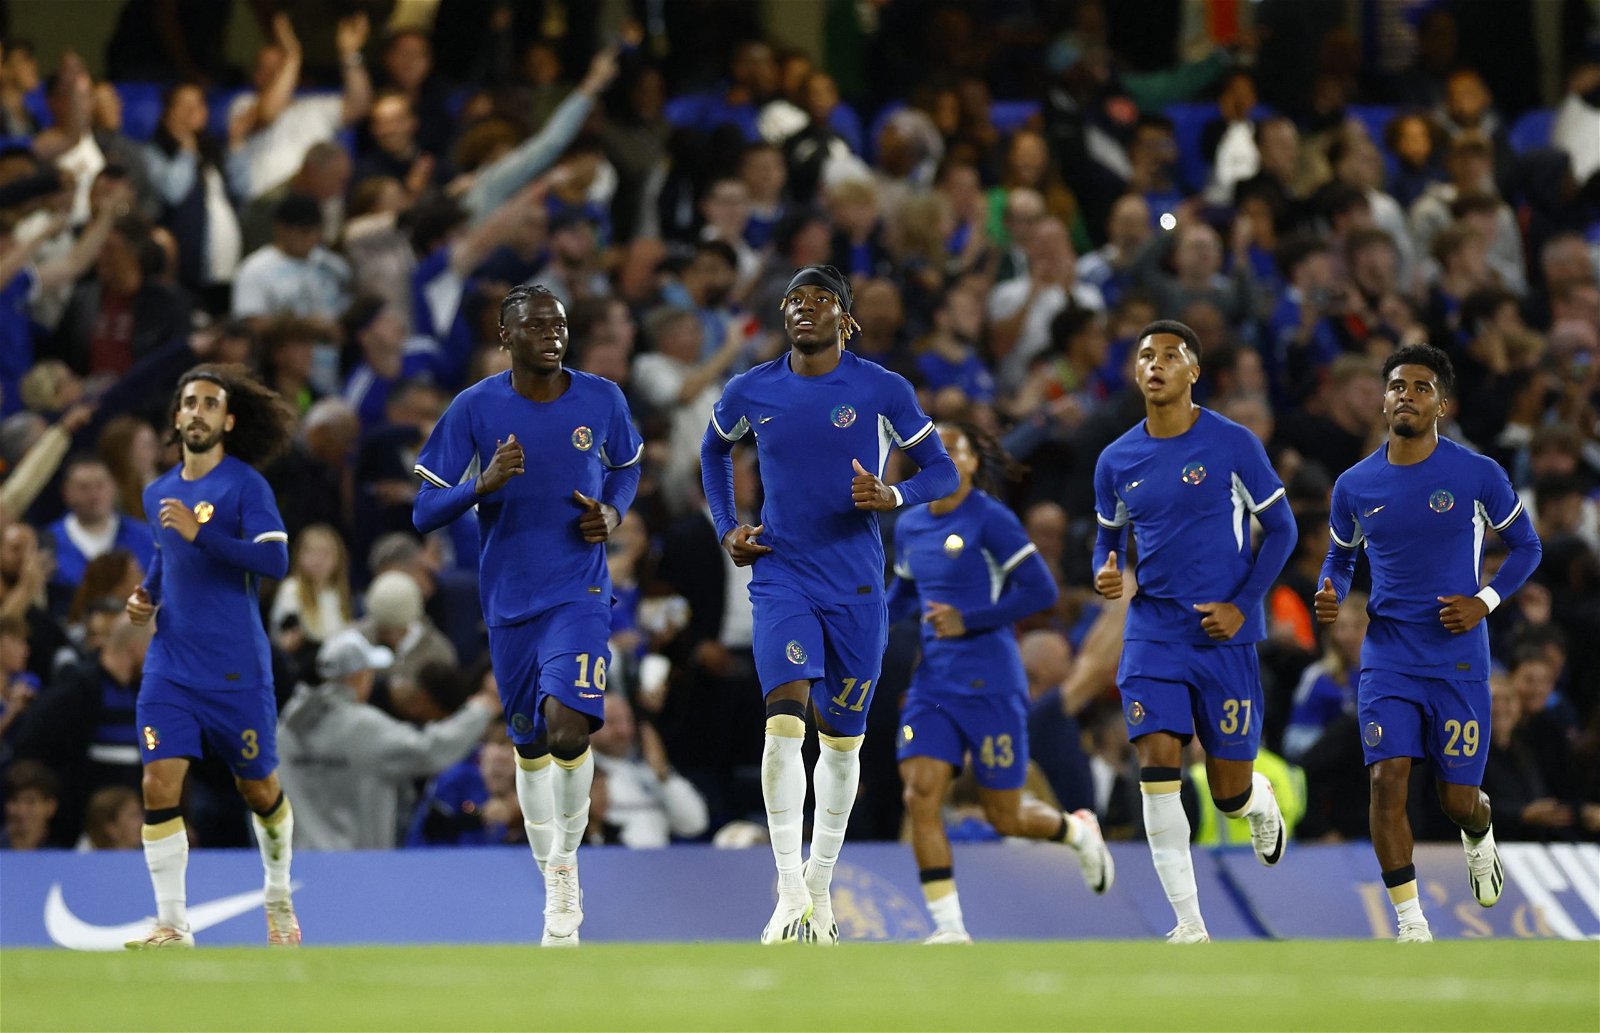 Chelsea FC's Injury crisis deepens ahead of Brentford clash 1